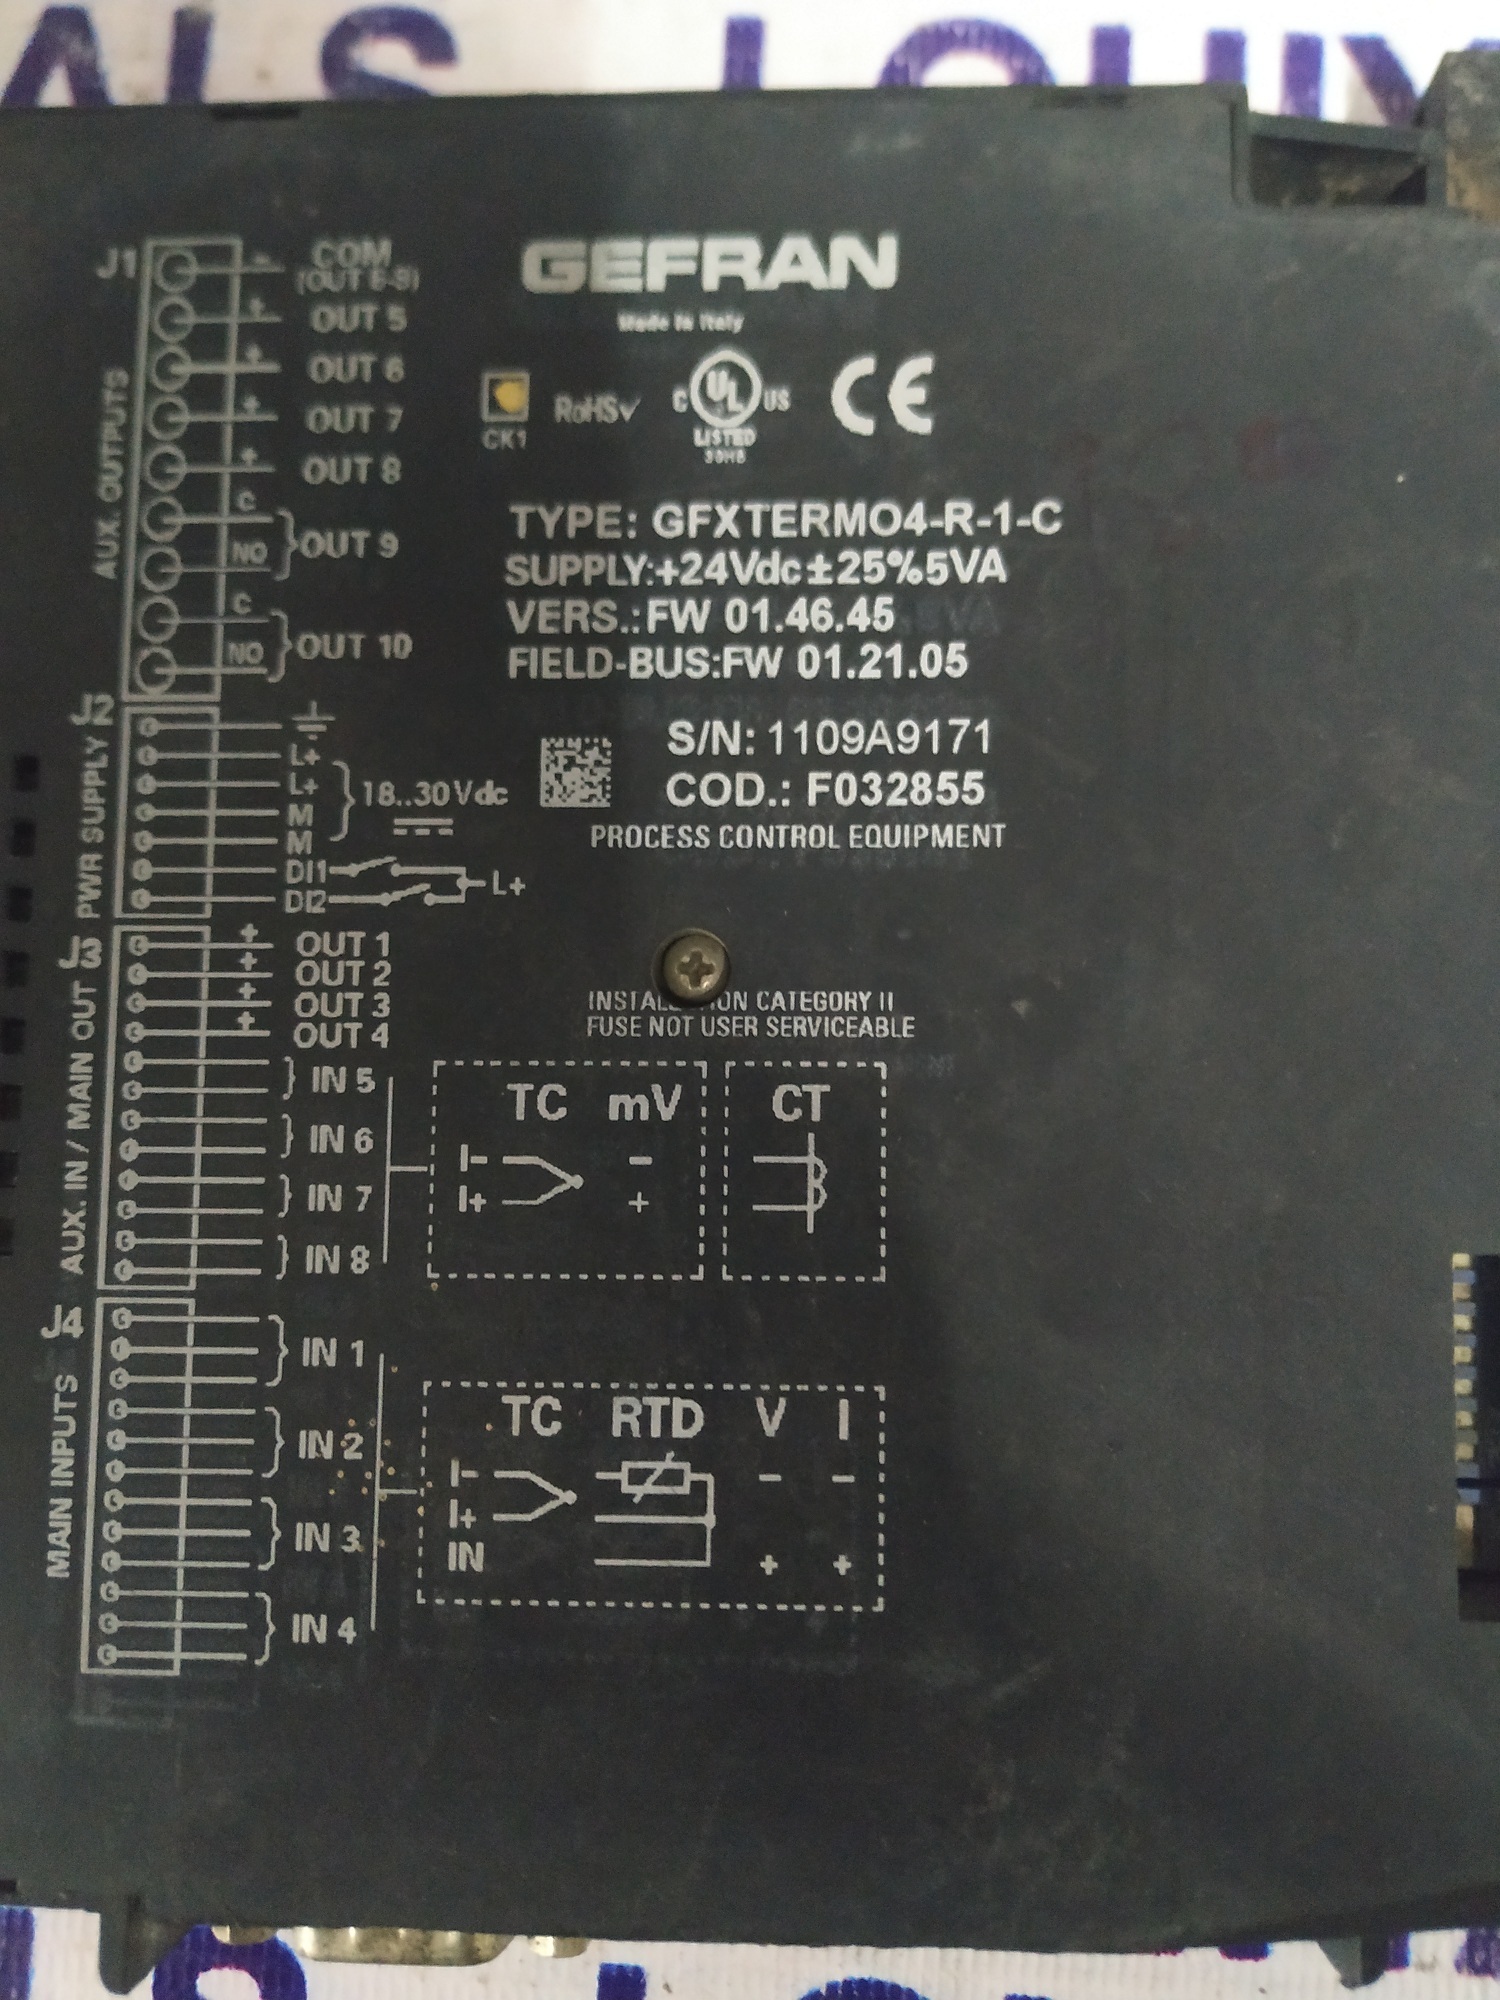 Gefran Power Controller Gfxterm04-r-1-c